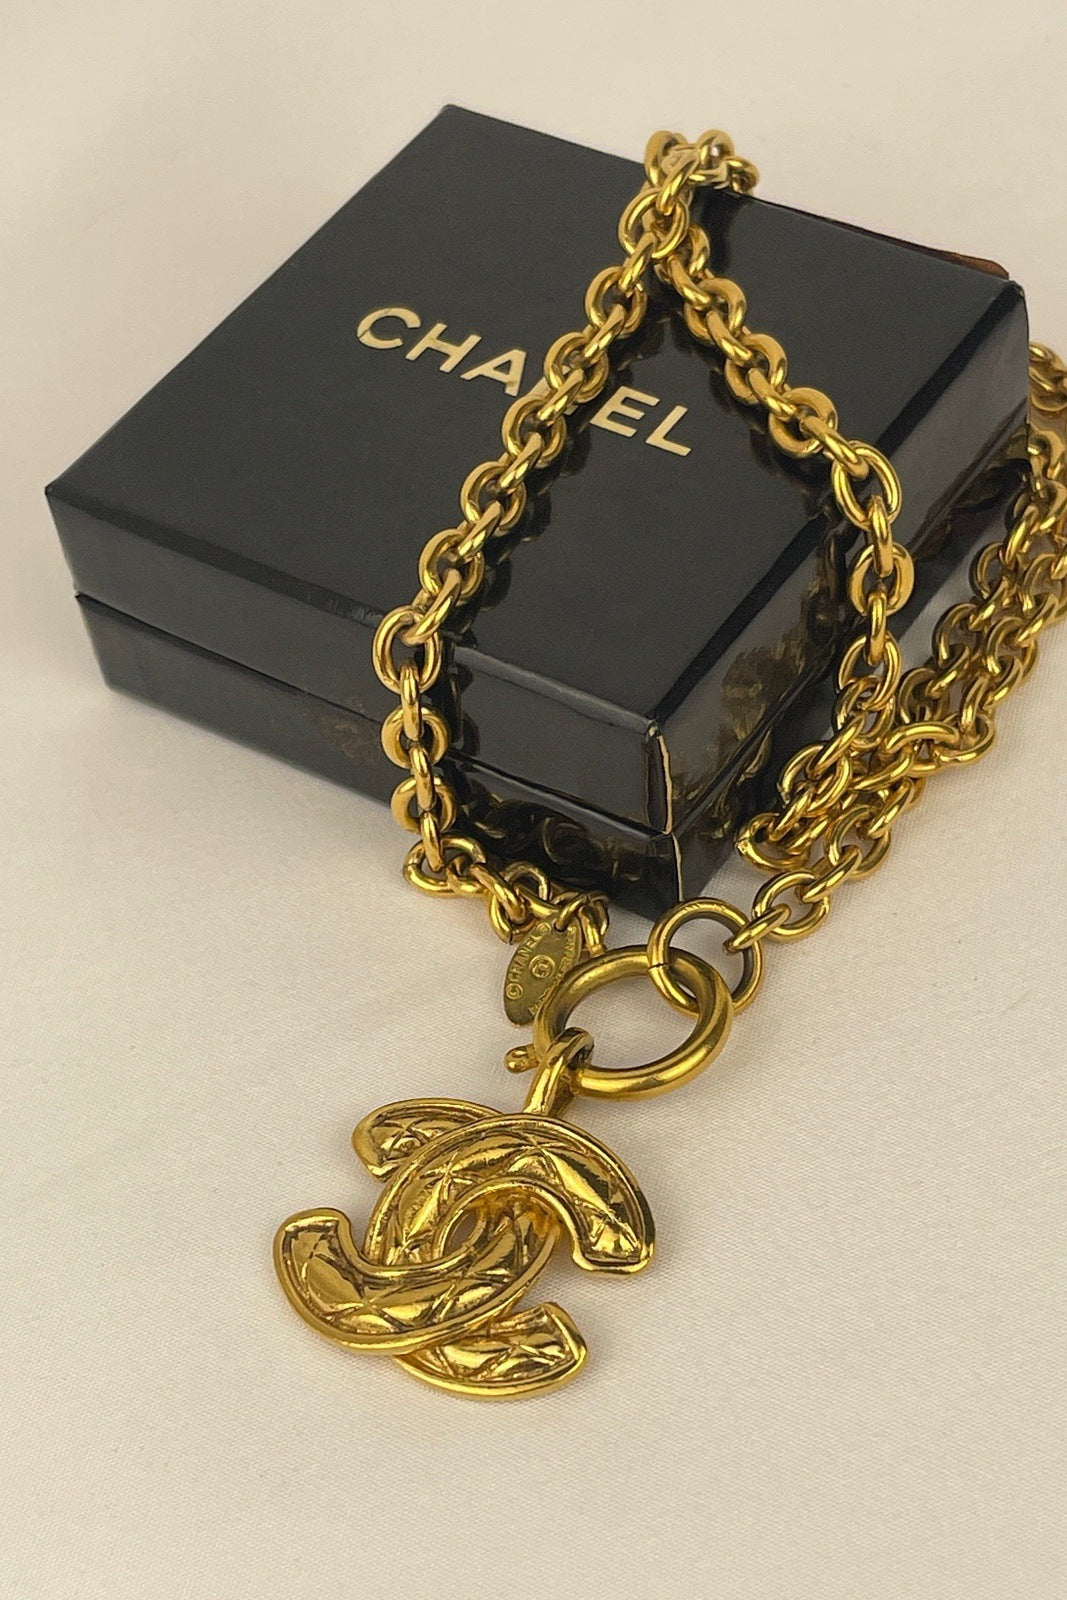 Authentic Chanel CC Gold Medium Necklace - Vintage Icon